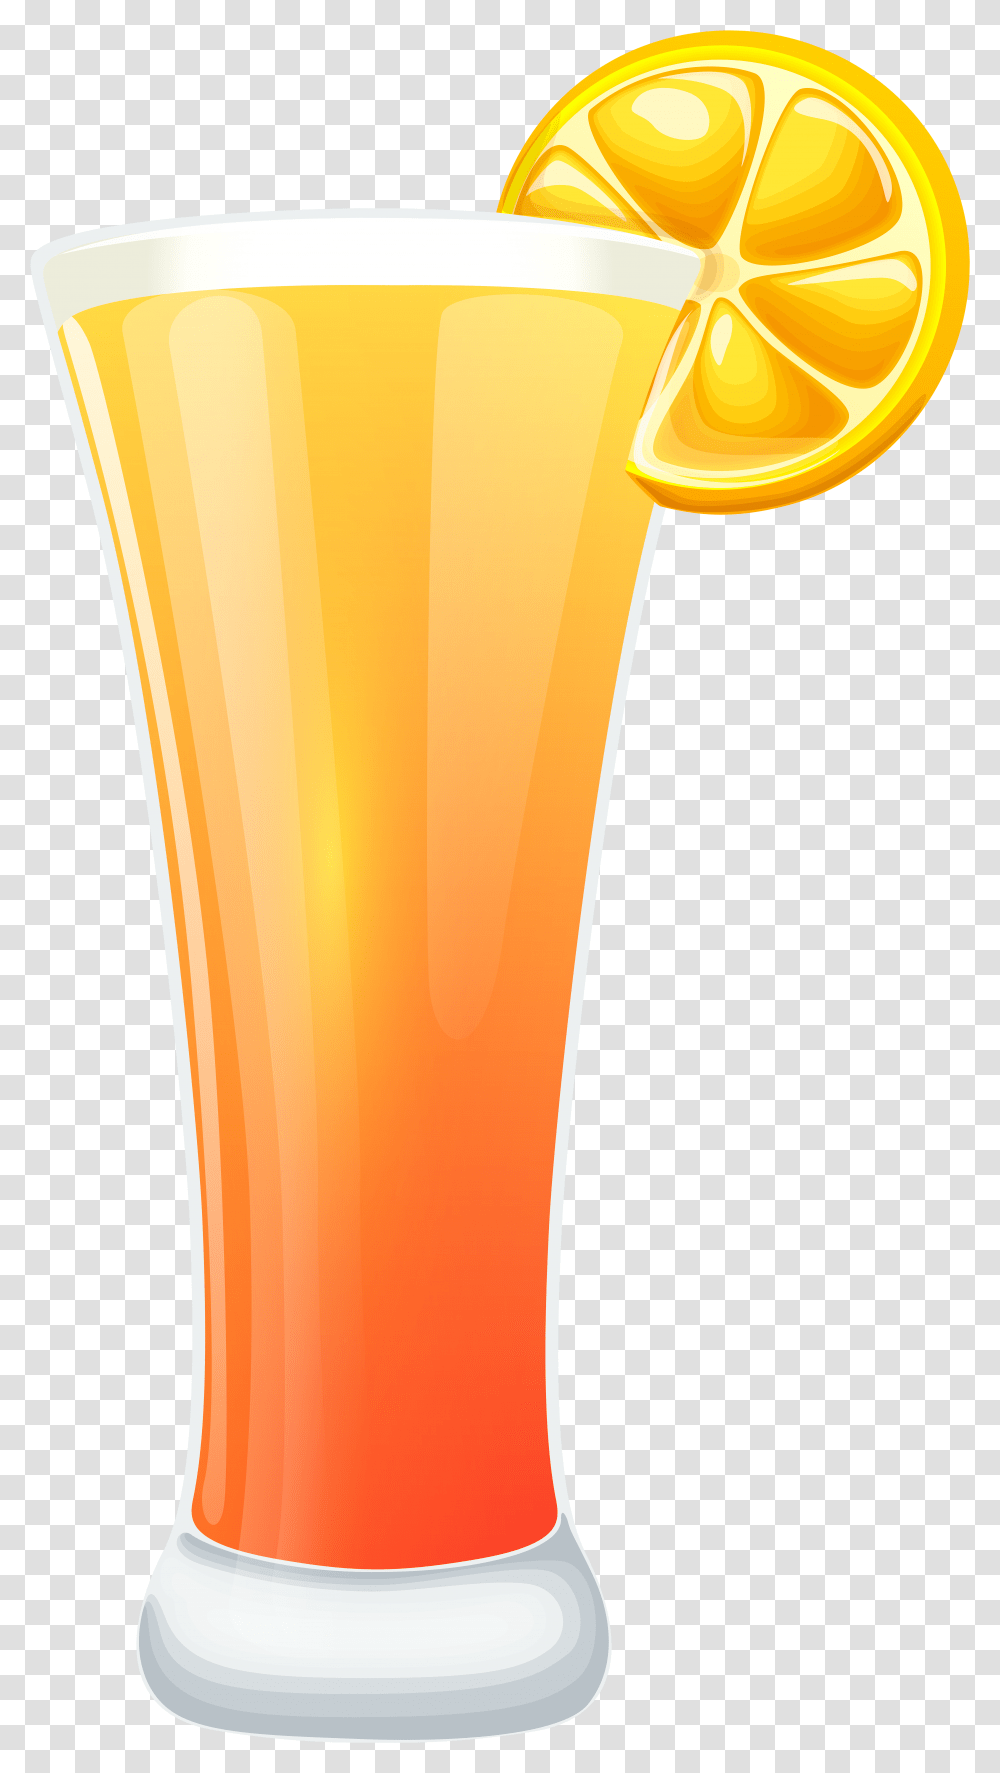 Orange Juice Clip Art Gallery Yopriceville Orange Juice Clipart Beverage Drink Glass Alcohol Transparent Png Pngset Com